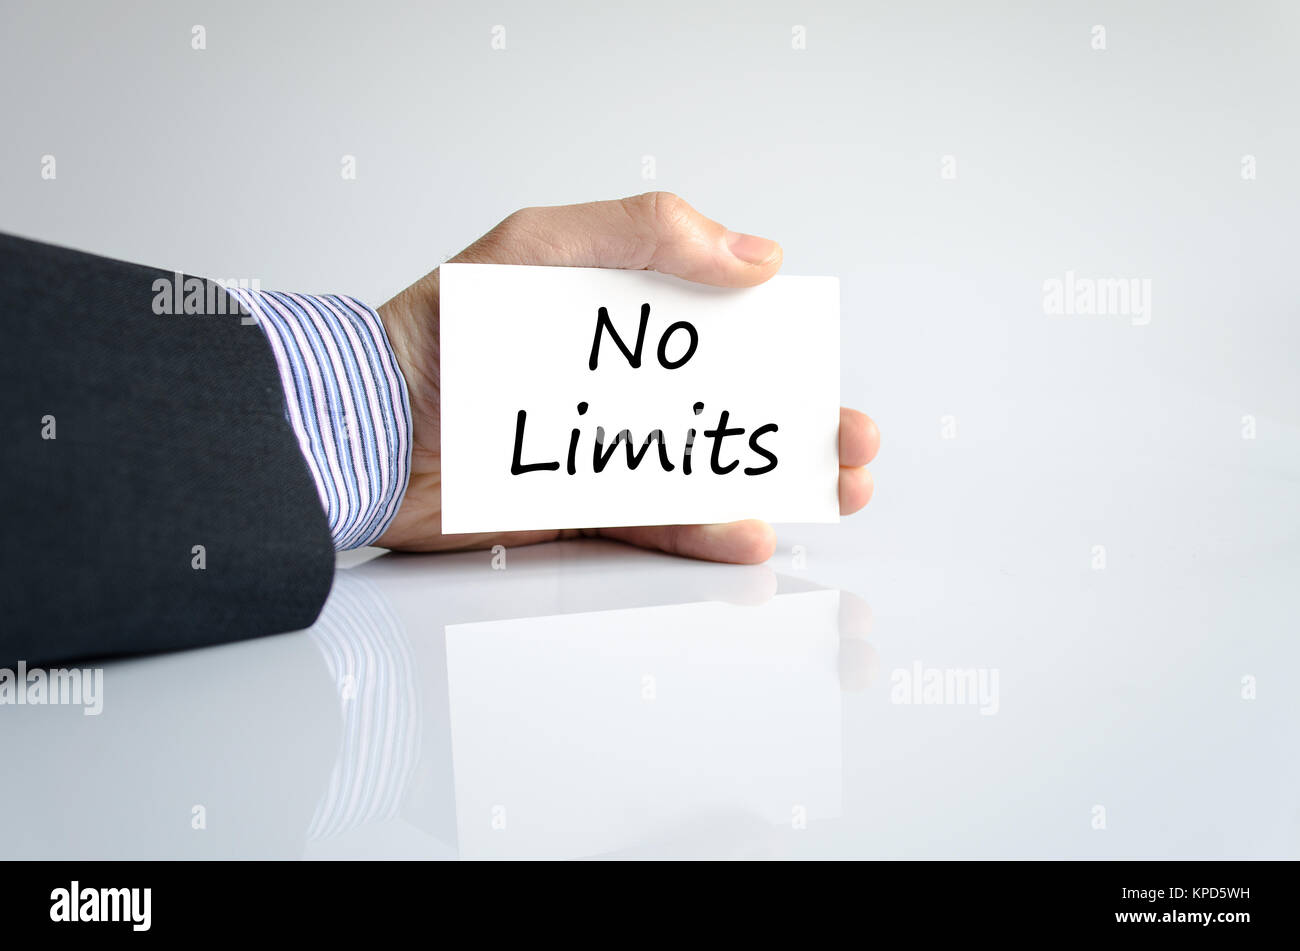 No limits text concept Stock Photo